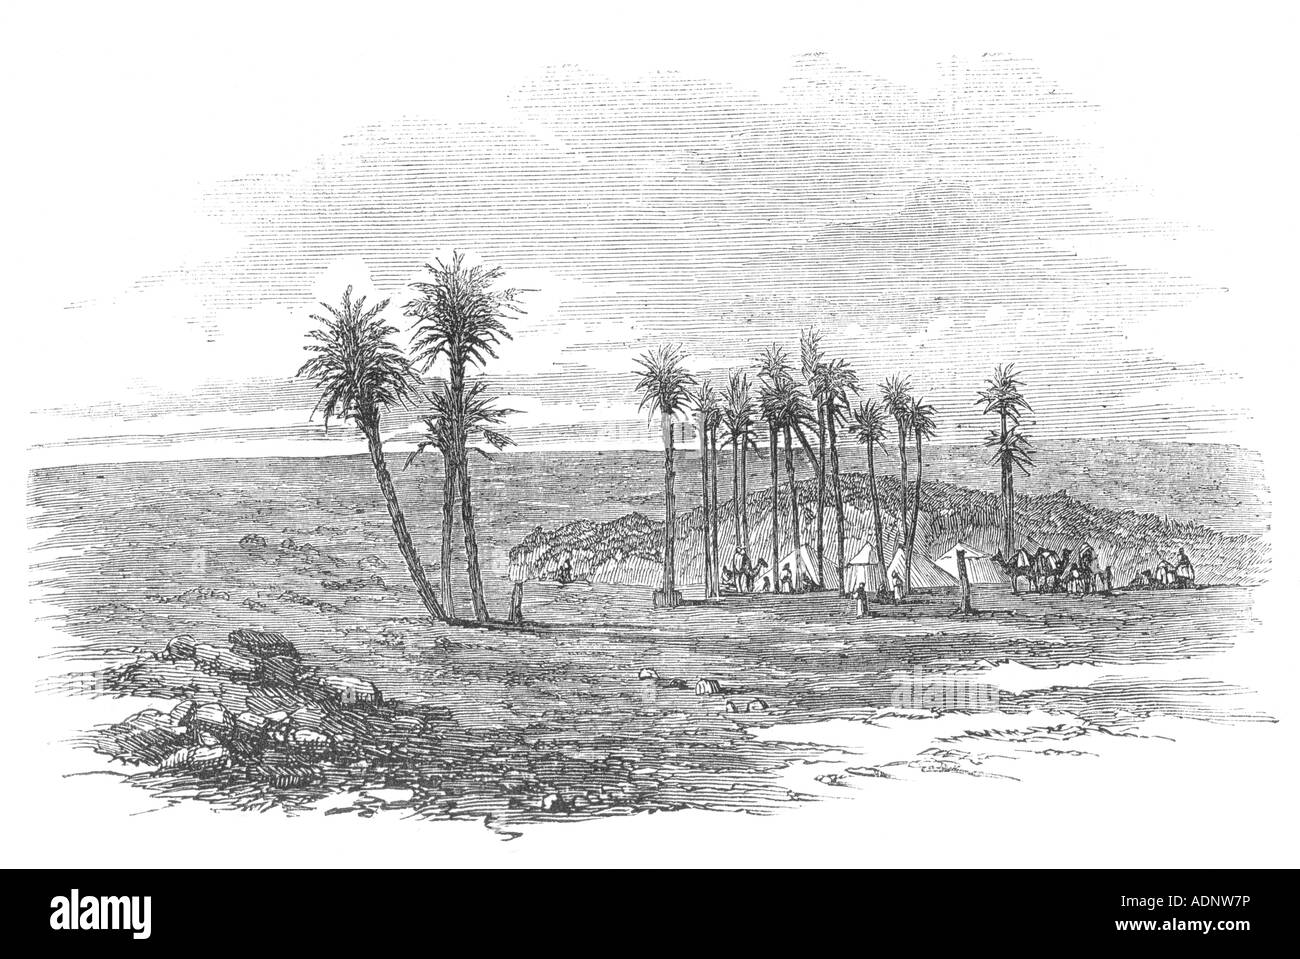 Oasis South East of Pelusium, Egypt, 19th Century Engraving Stock Photo